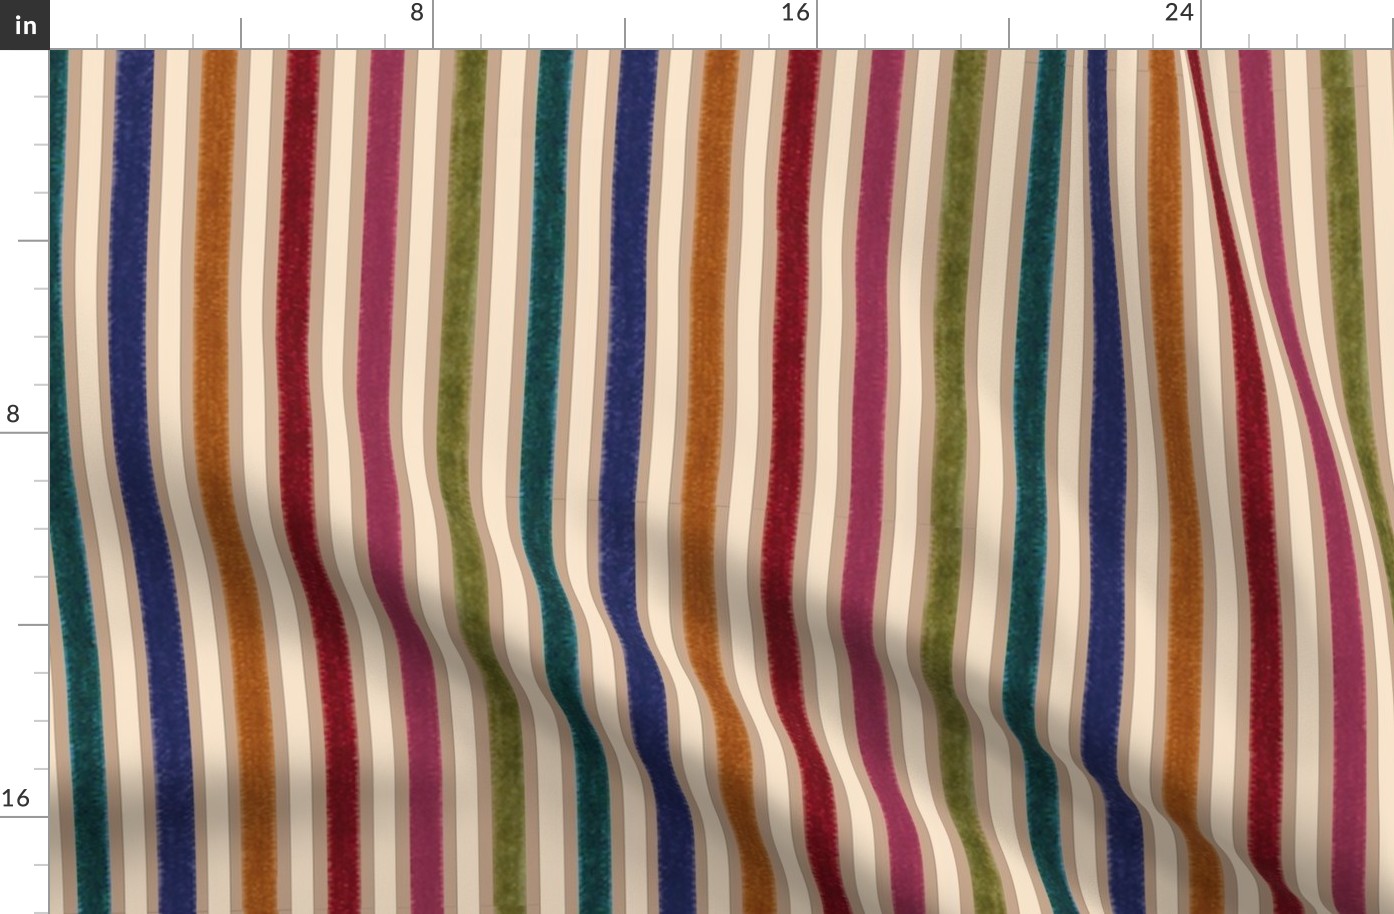 Multi Stripes - Carnaval (Large)